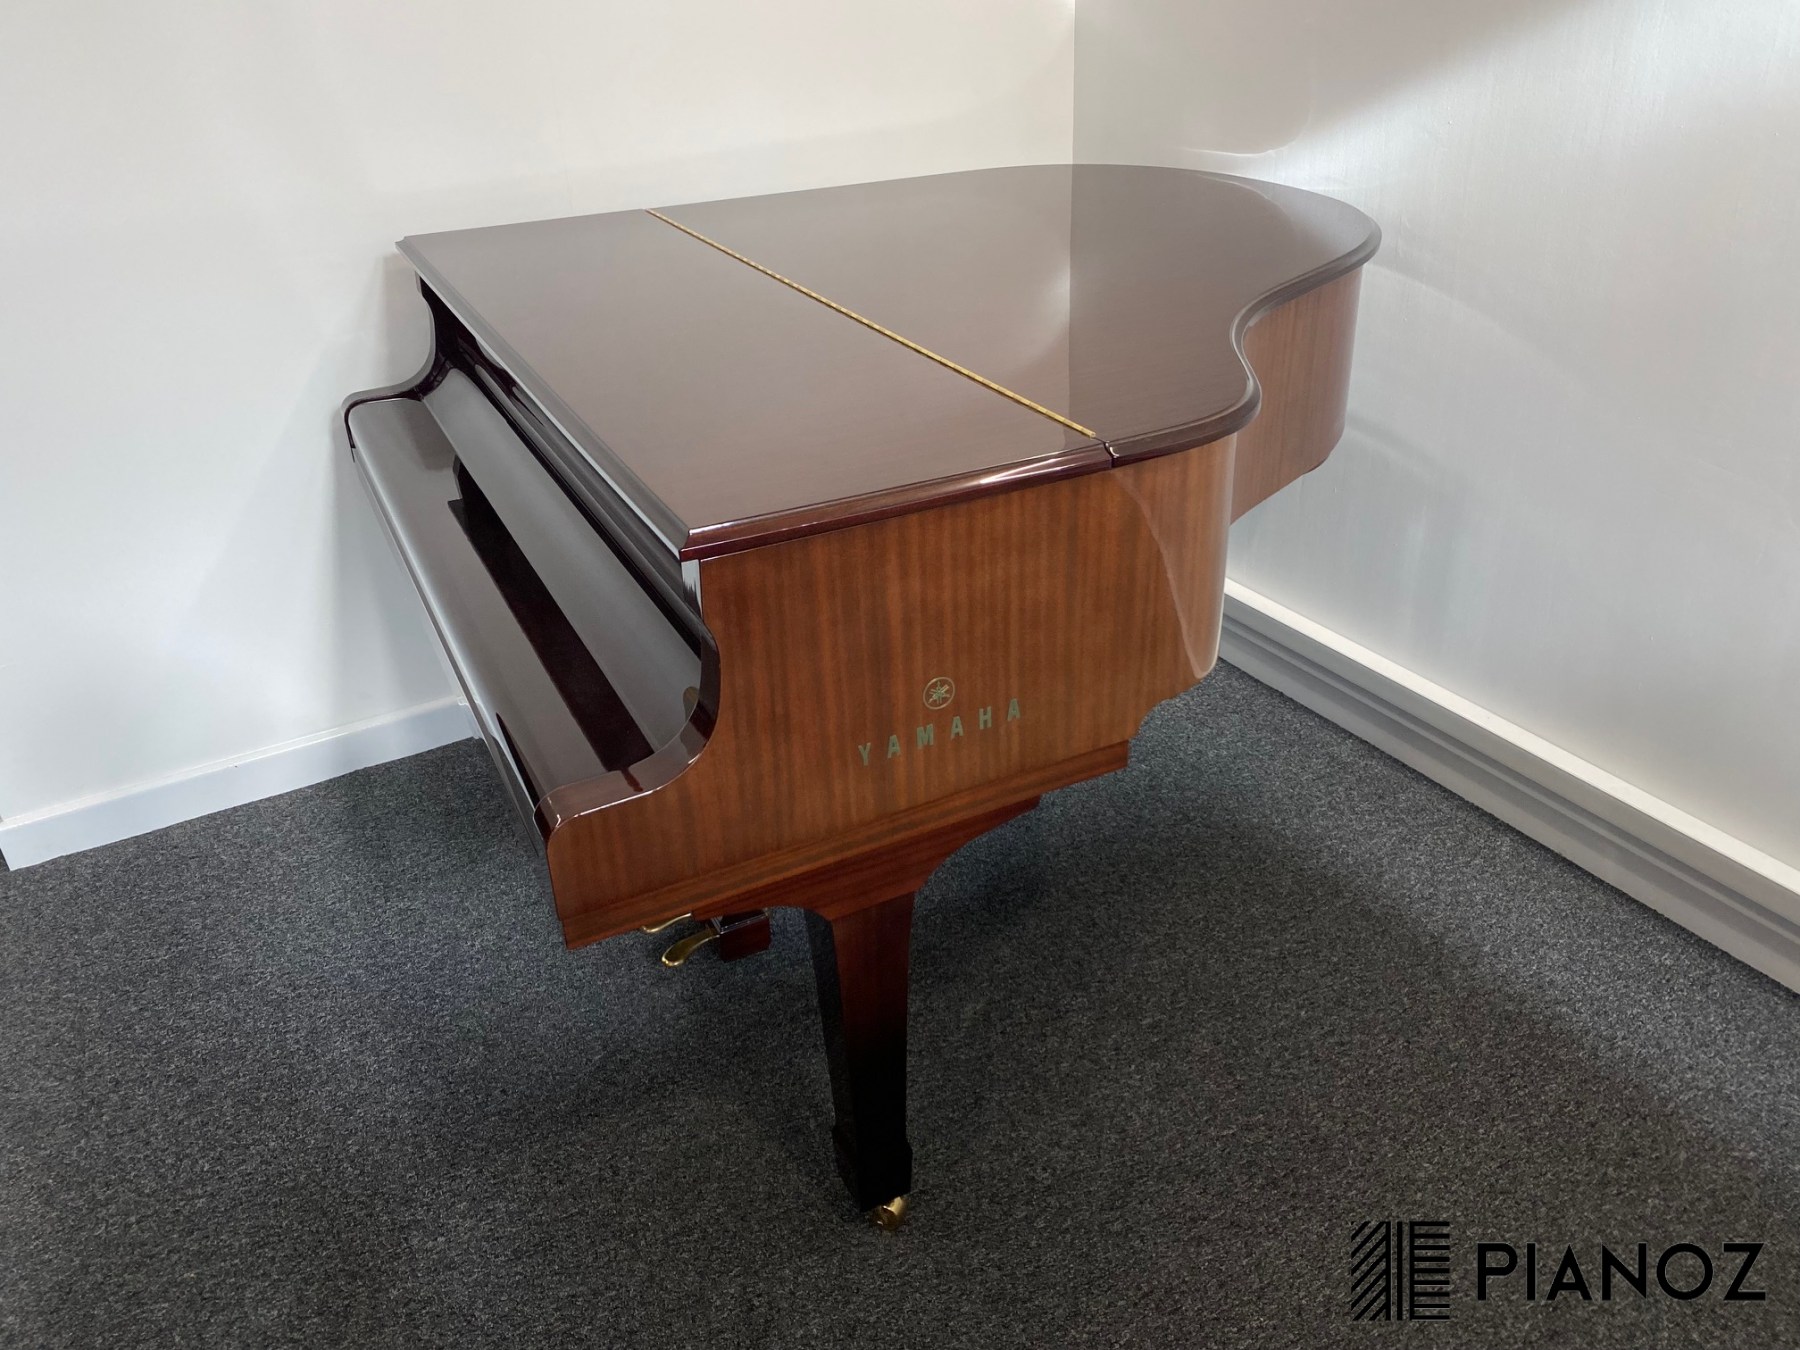 Yamaha C1 Japanese Baby Grand Piano piano for sale in UK